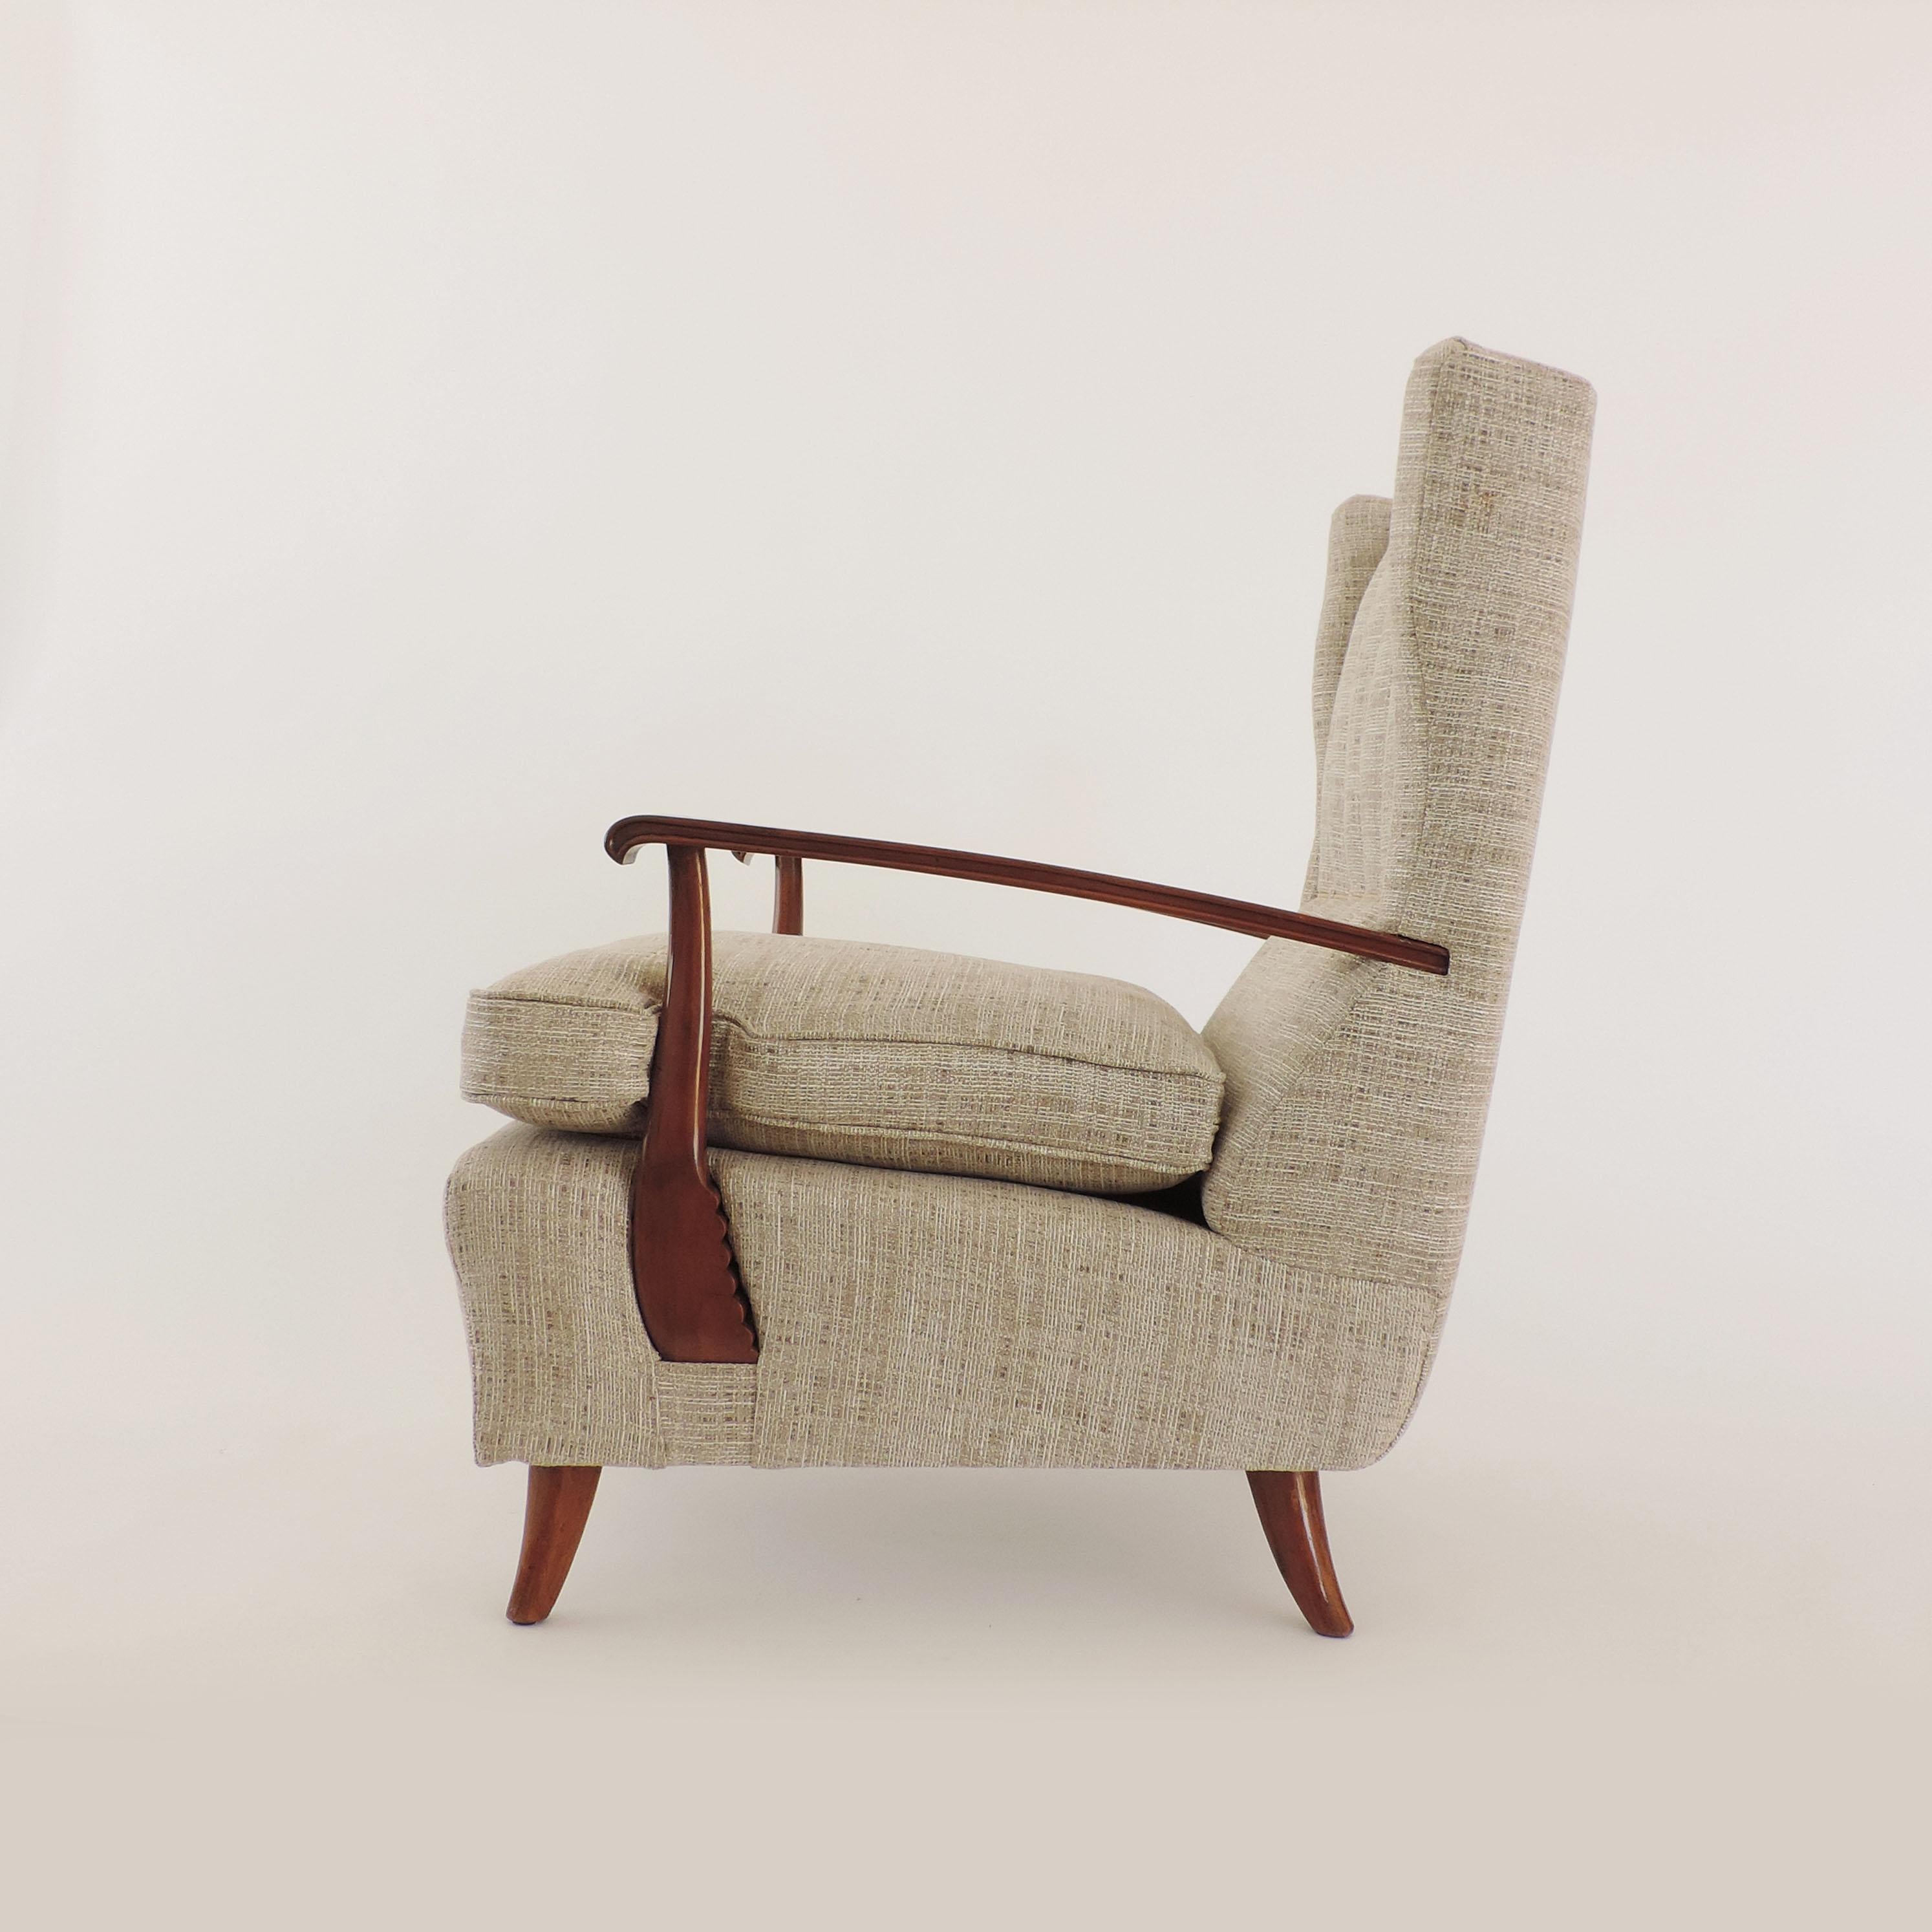 Splendid pair of streamline Paolo Buffa armchairs, 
Sculpted wood parts.
Ref: I mobili di Paolo Buffa p. 23.